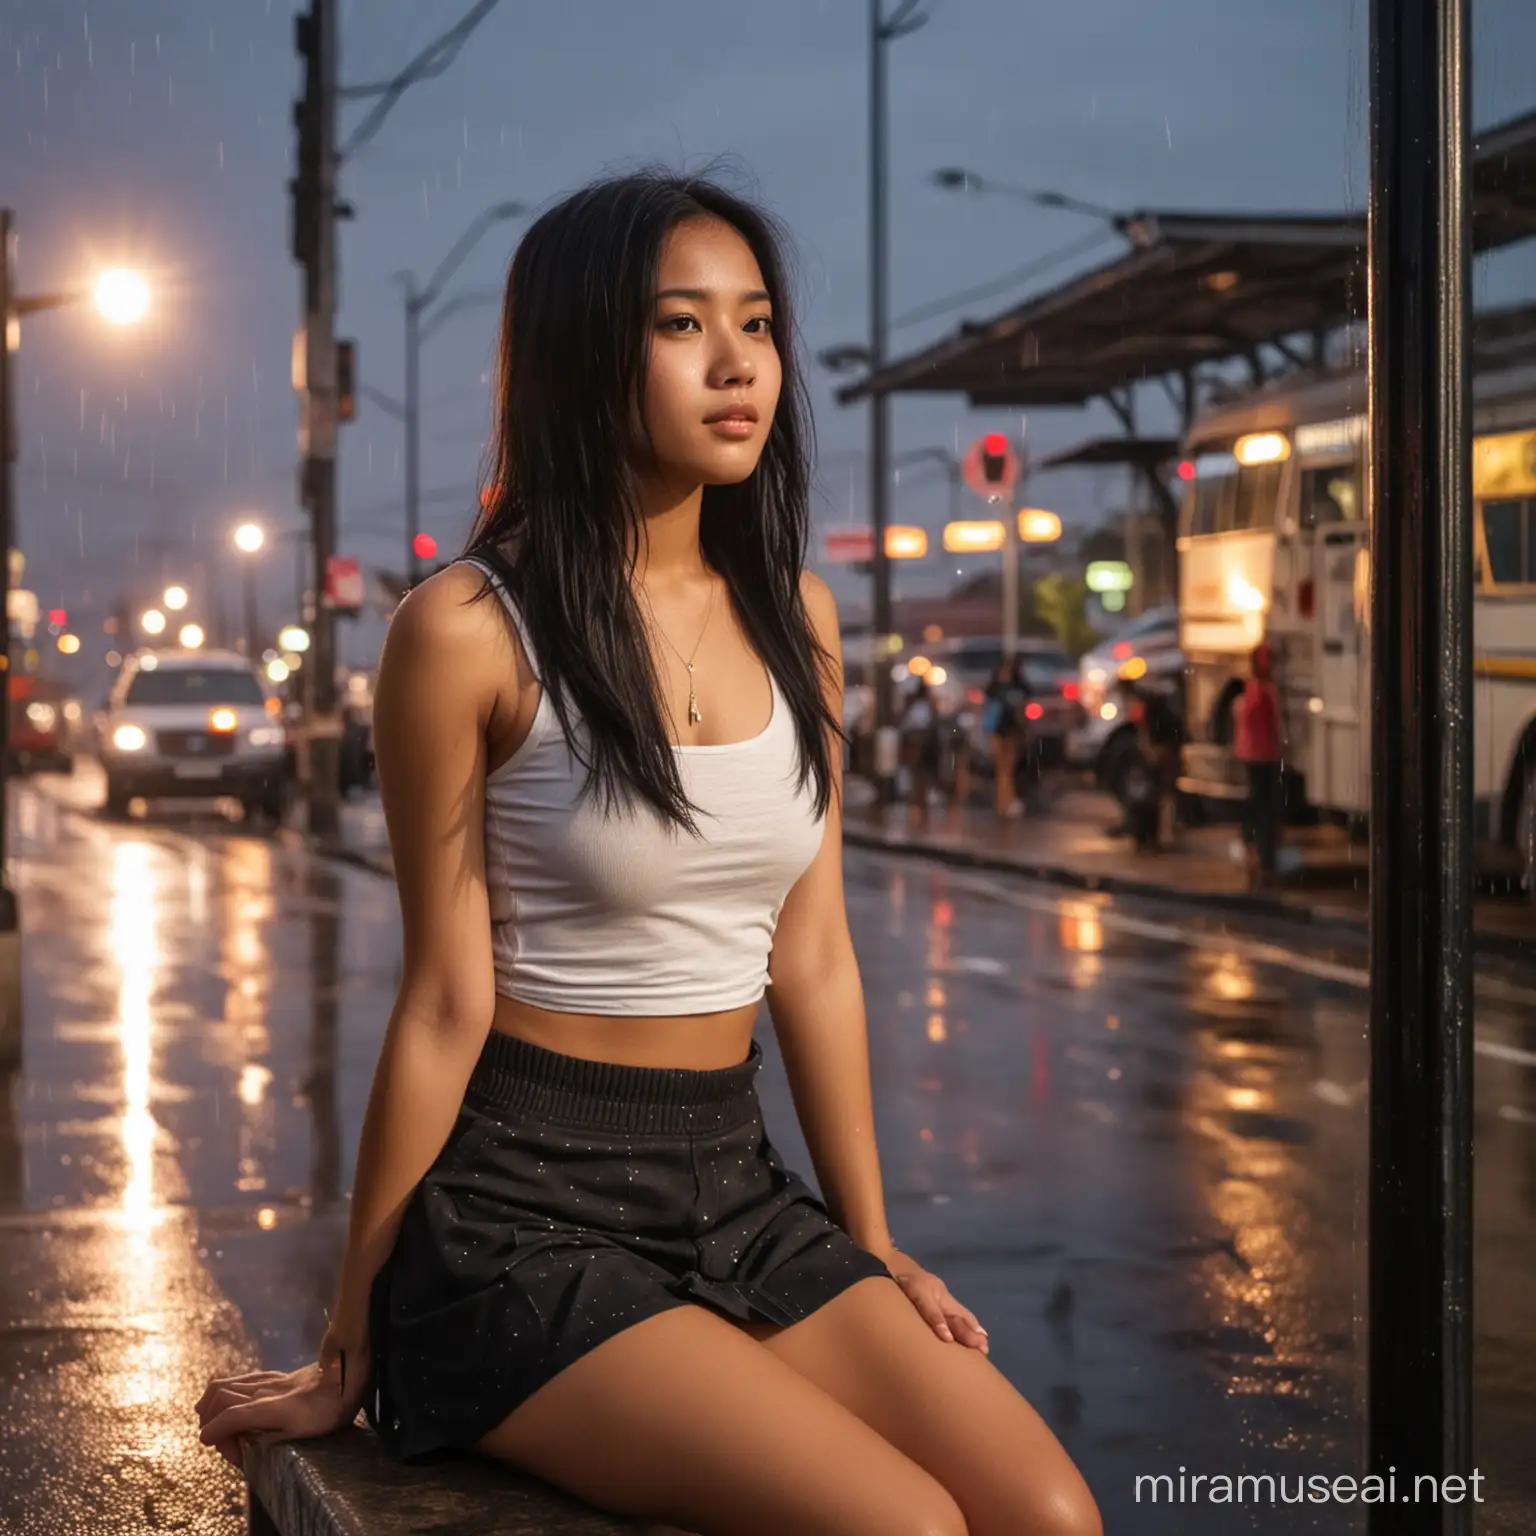 Foto gadis indonesia 20 tahun,rambut hitam panjang,pakai tank top,pakai rok mini sedang duduk di halte bus,suasana hari bujan gerimis,senja dan lampu lampu jalansudah bernyala